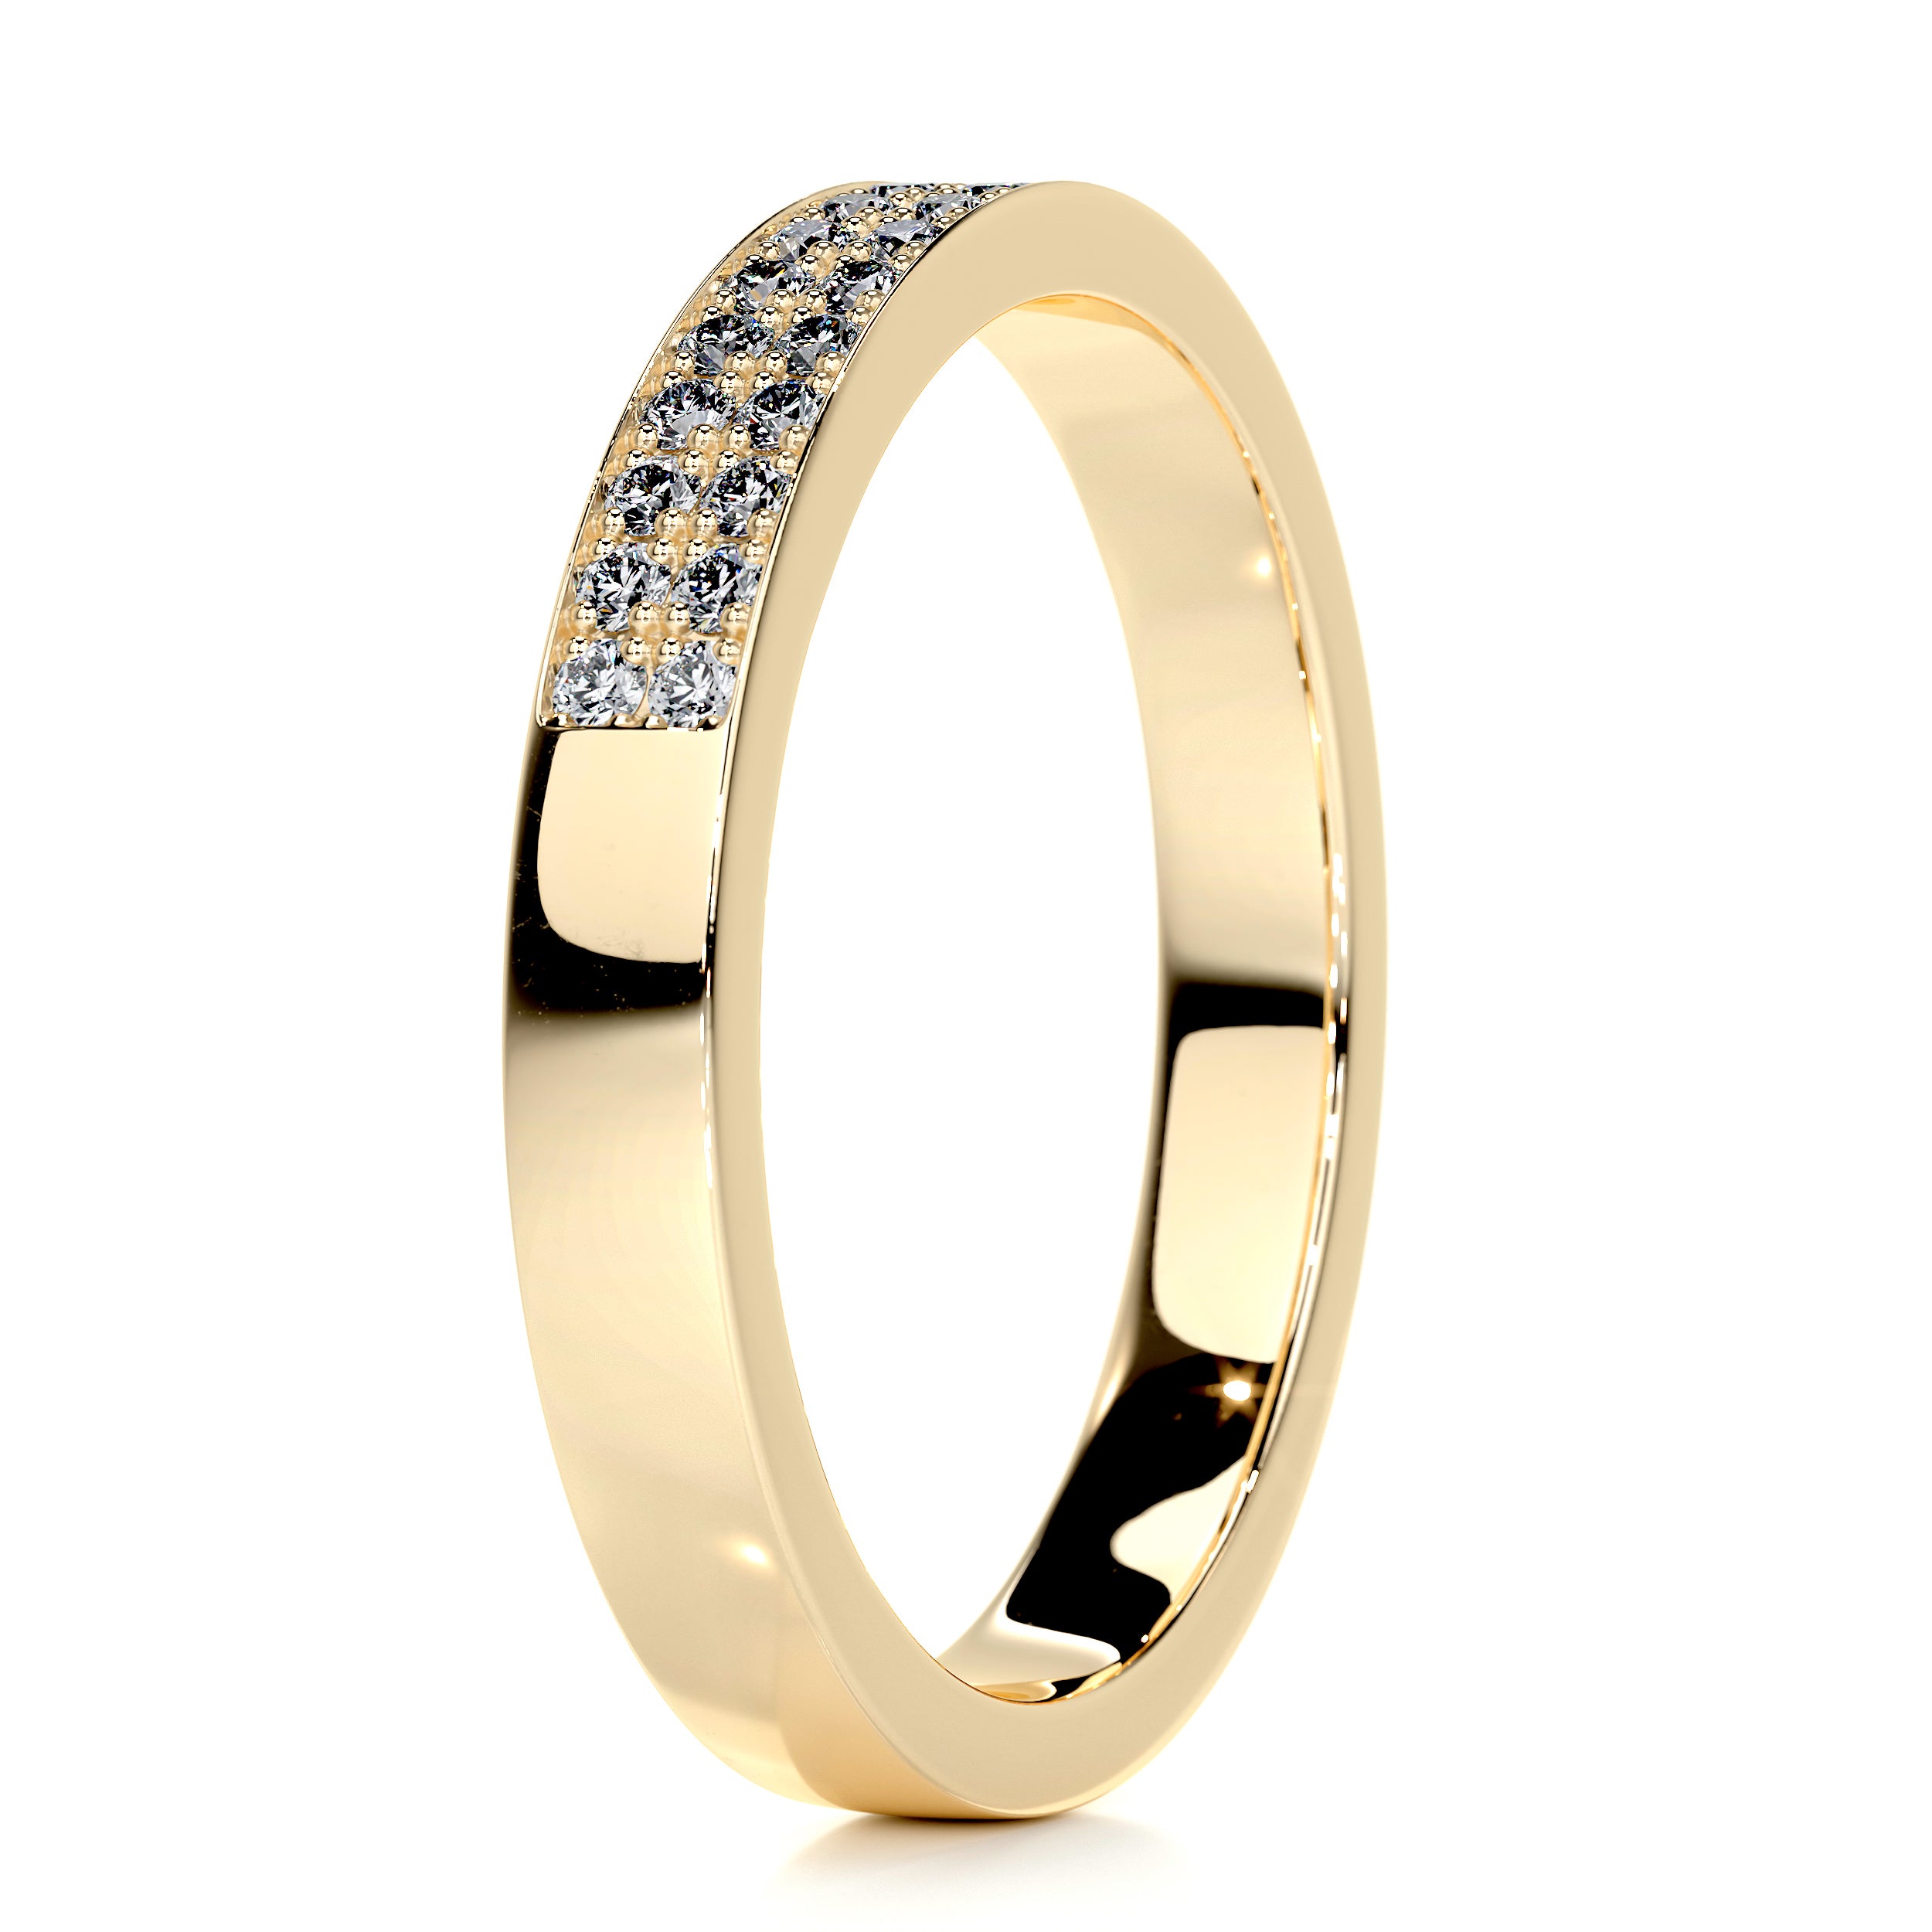 June Diamond Wedding Ring   (0.2 Carat) - 18K Yellow Gold